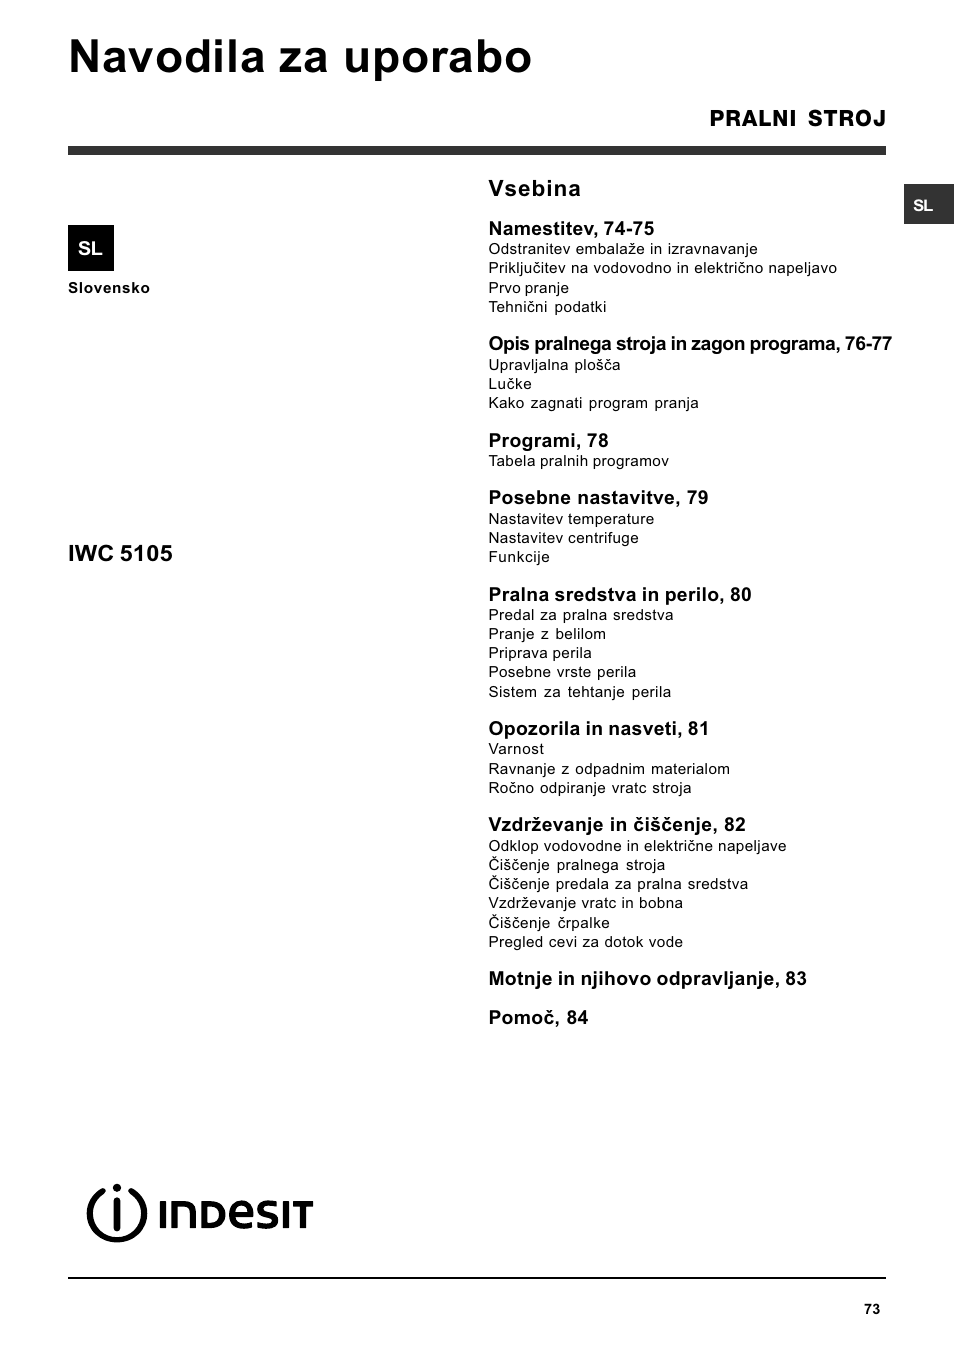 Navodila za uporabo, Vsebina, Iwc 5105 | Indesit IWC-5105-(EU) User Manual  | Page 73 / 84 | Original mode